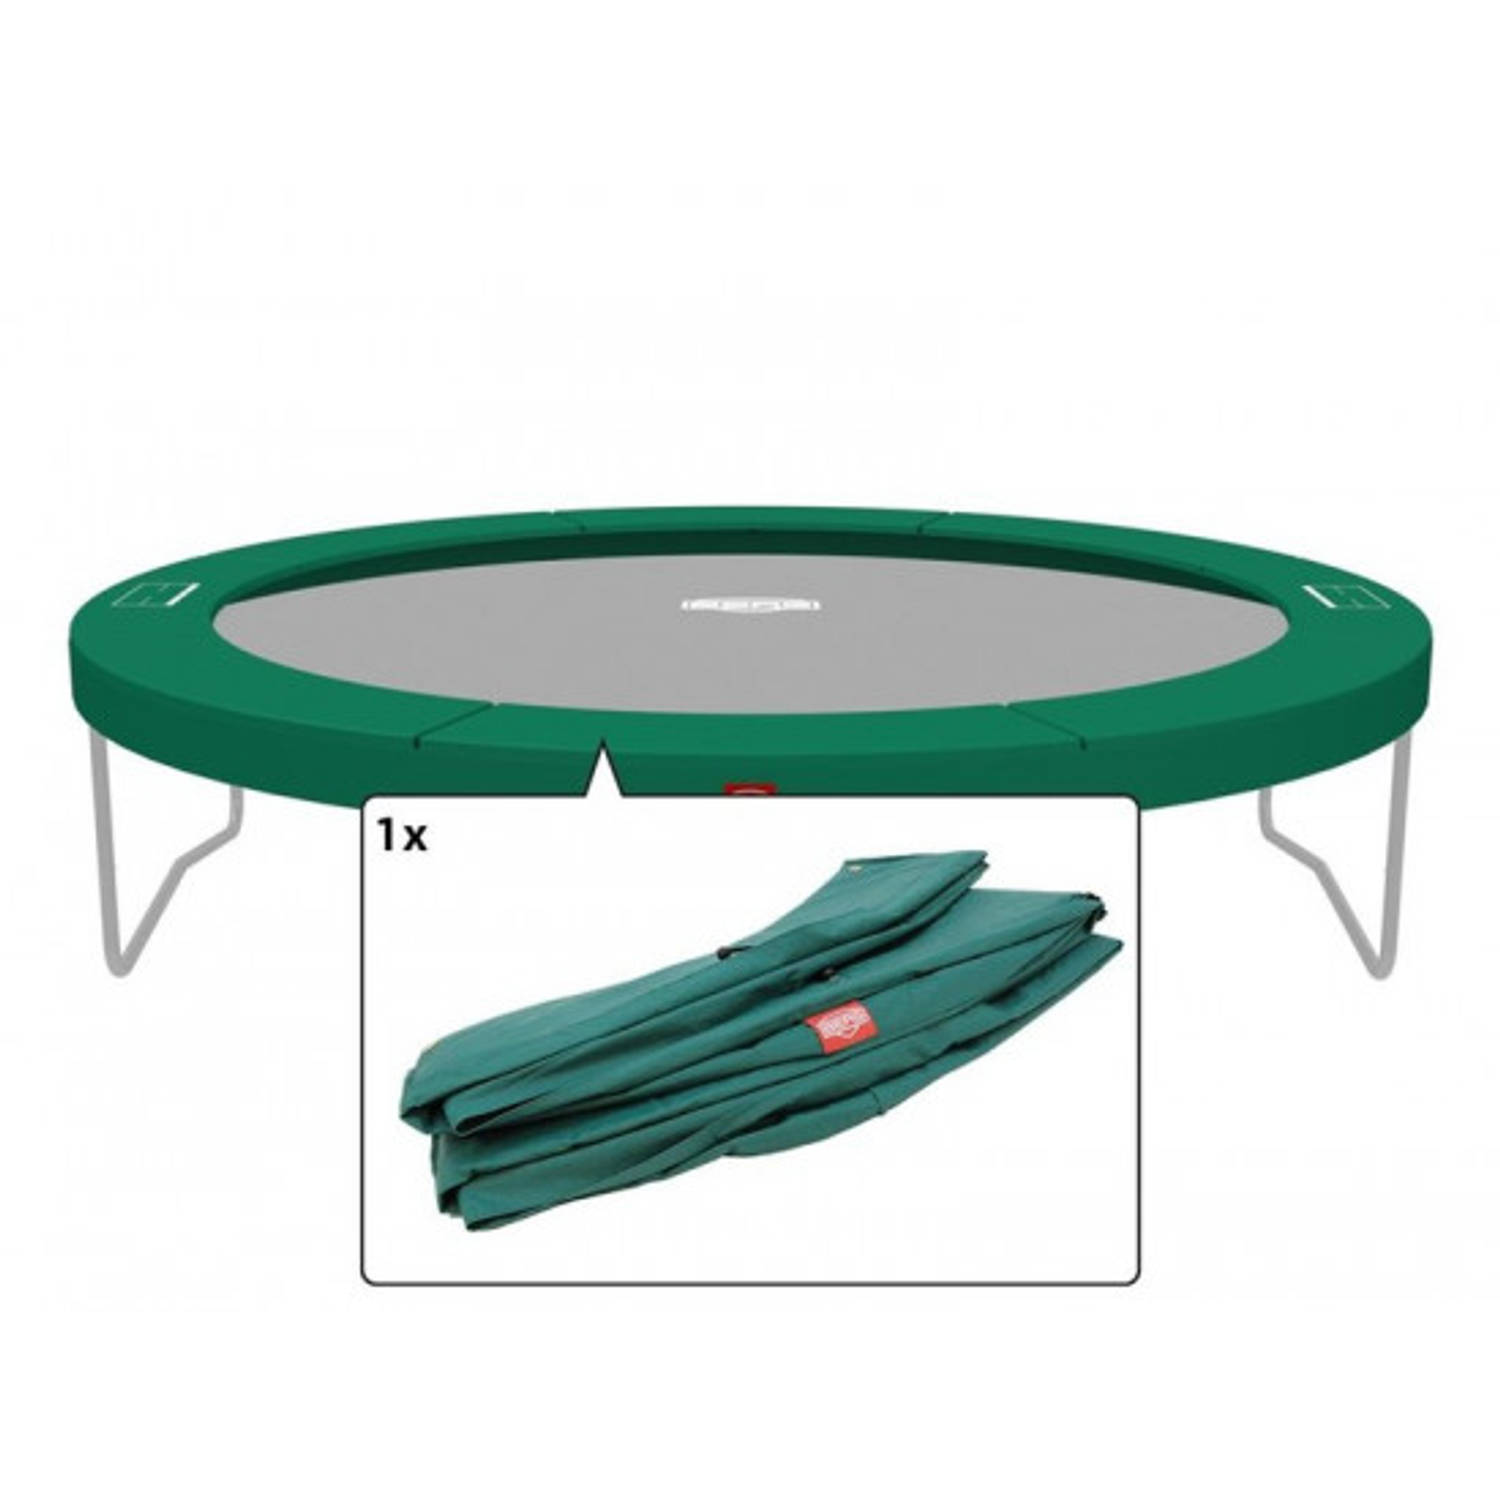 Berg trampoline rand Champion 270 - groen